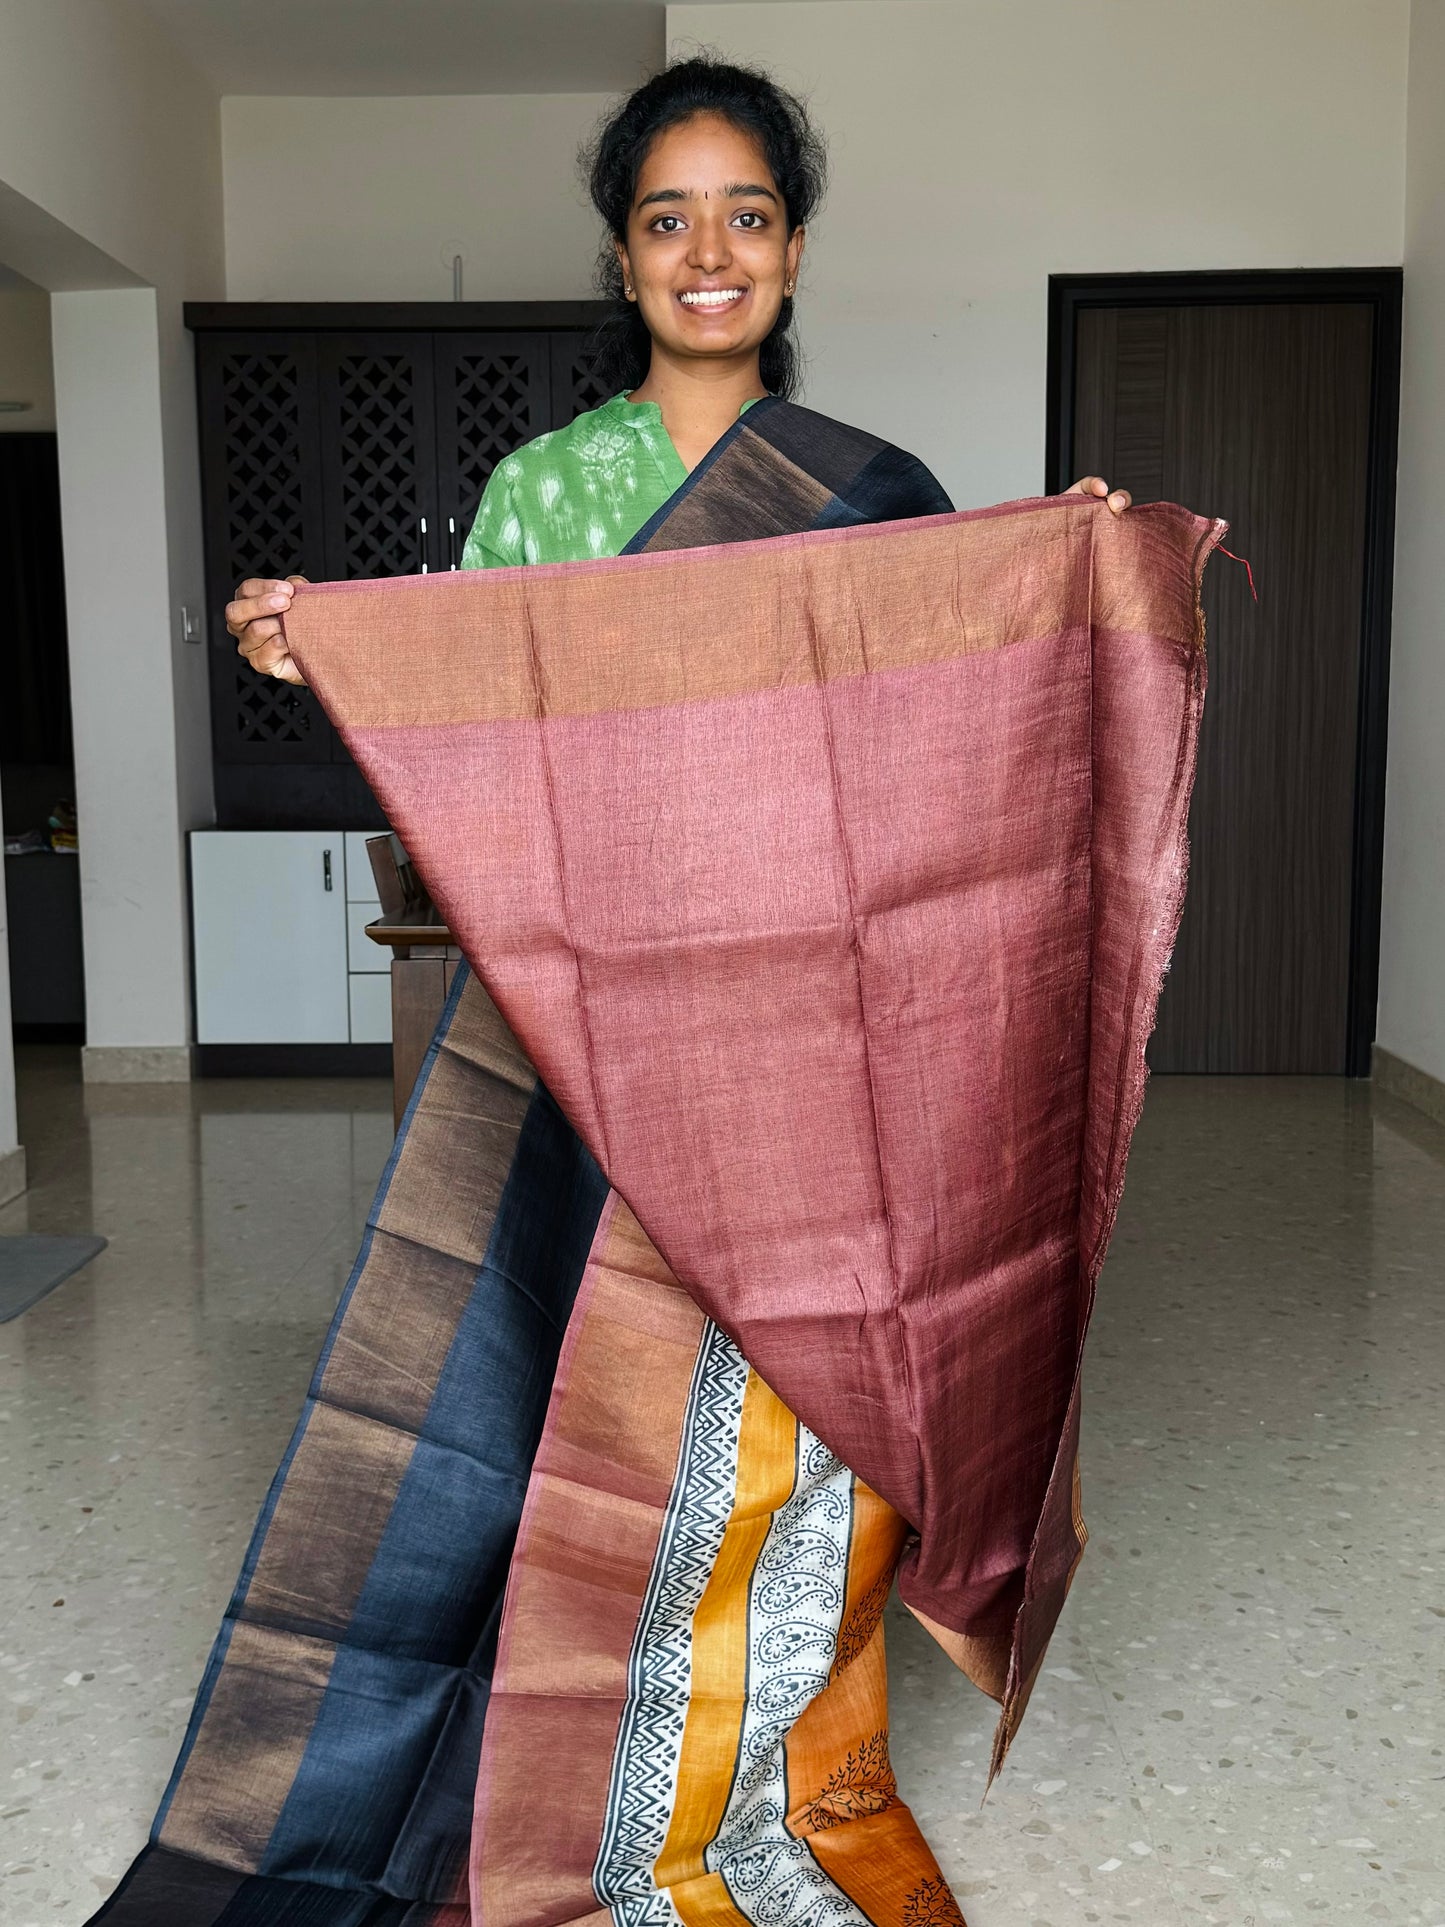 Black,Brown and Orange Tussar Silk Saree with Prints